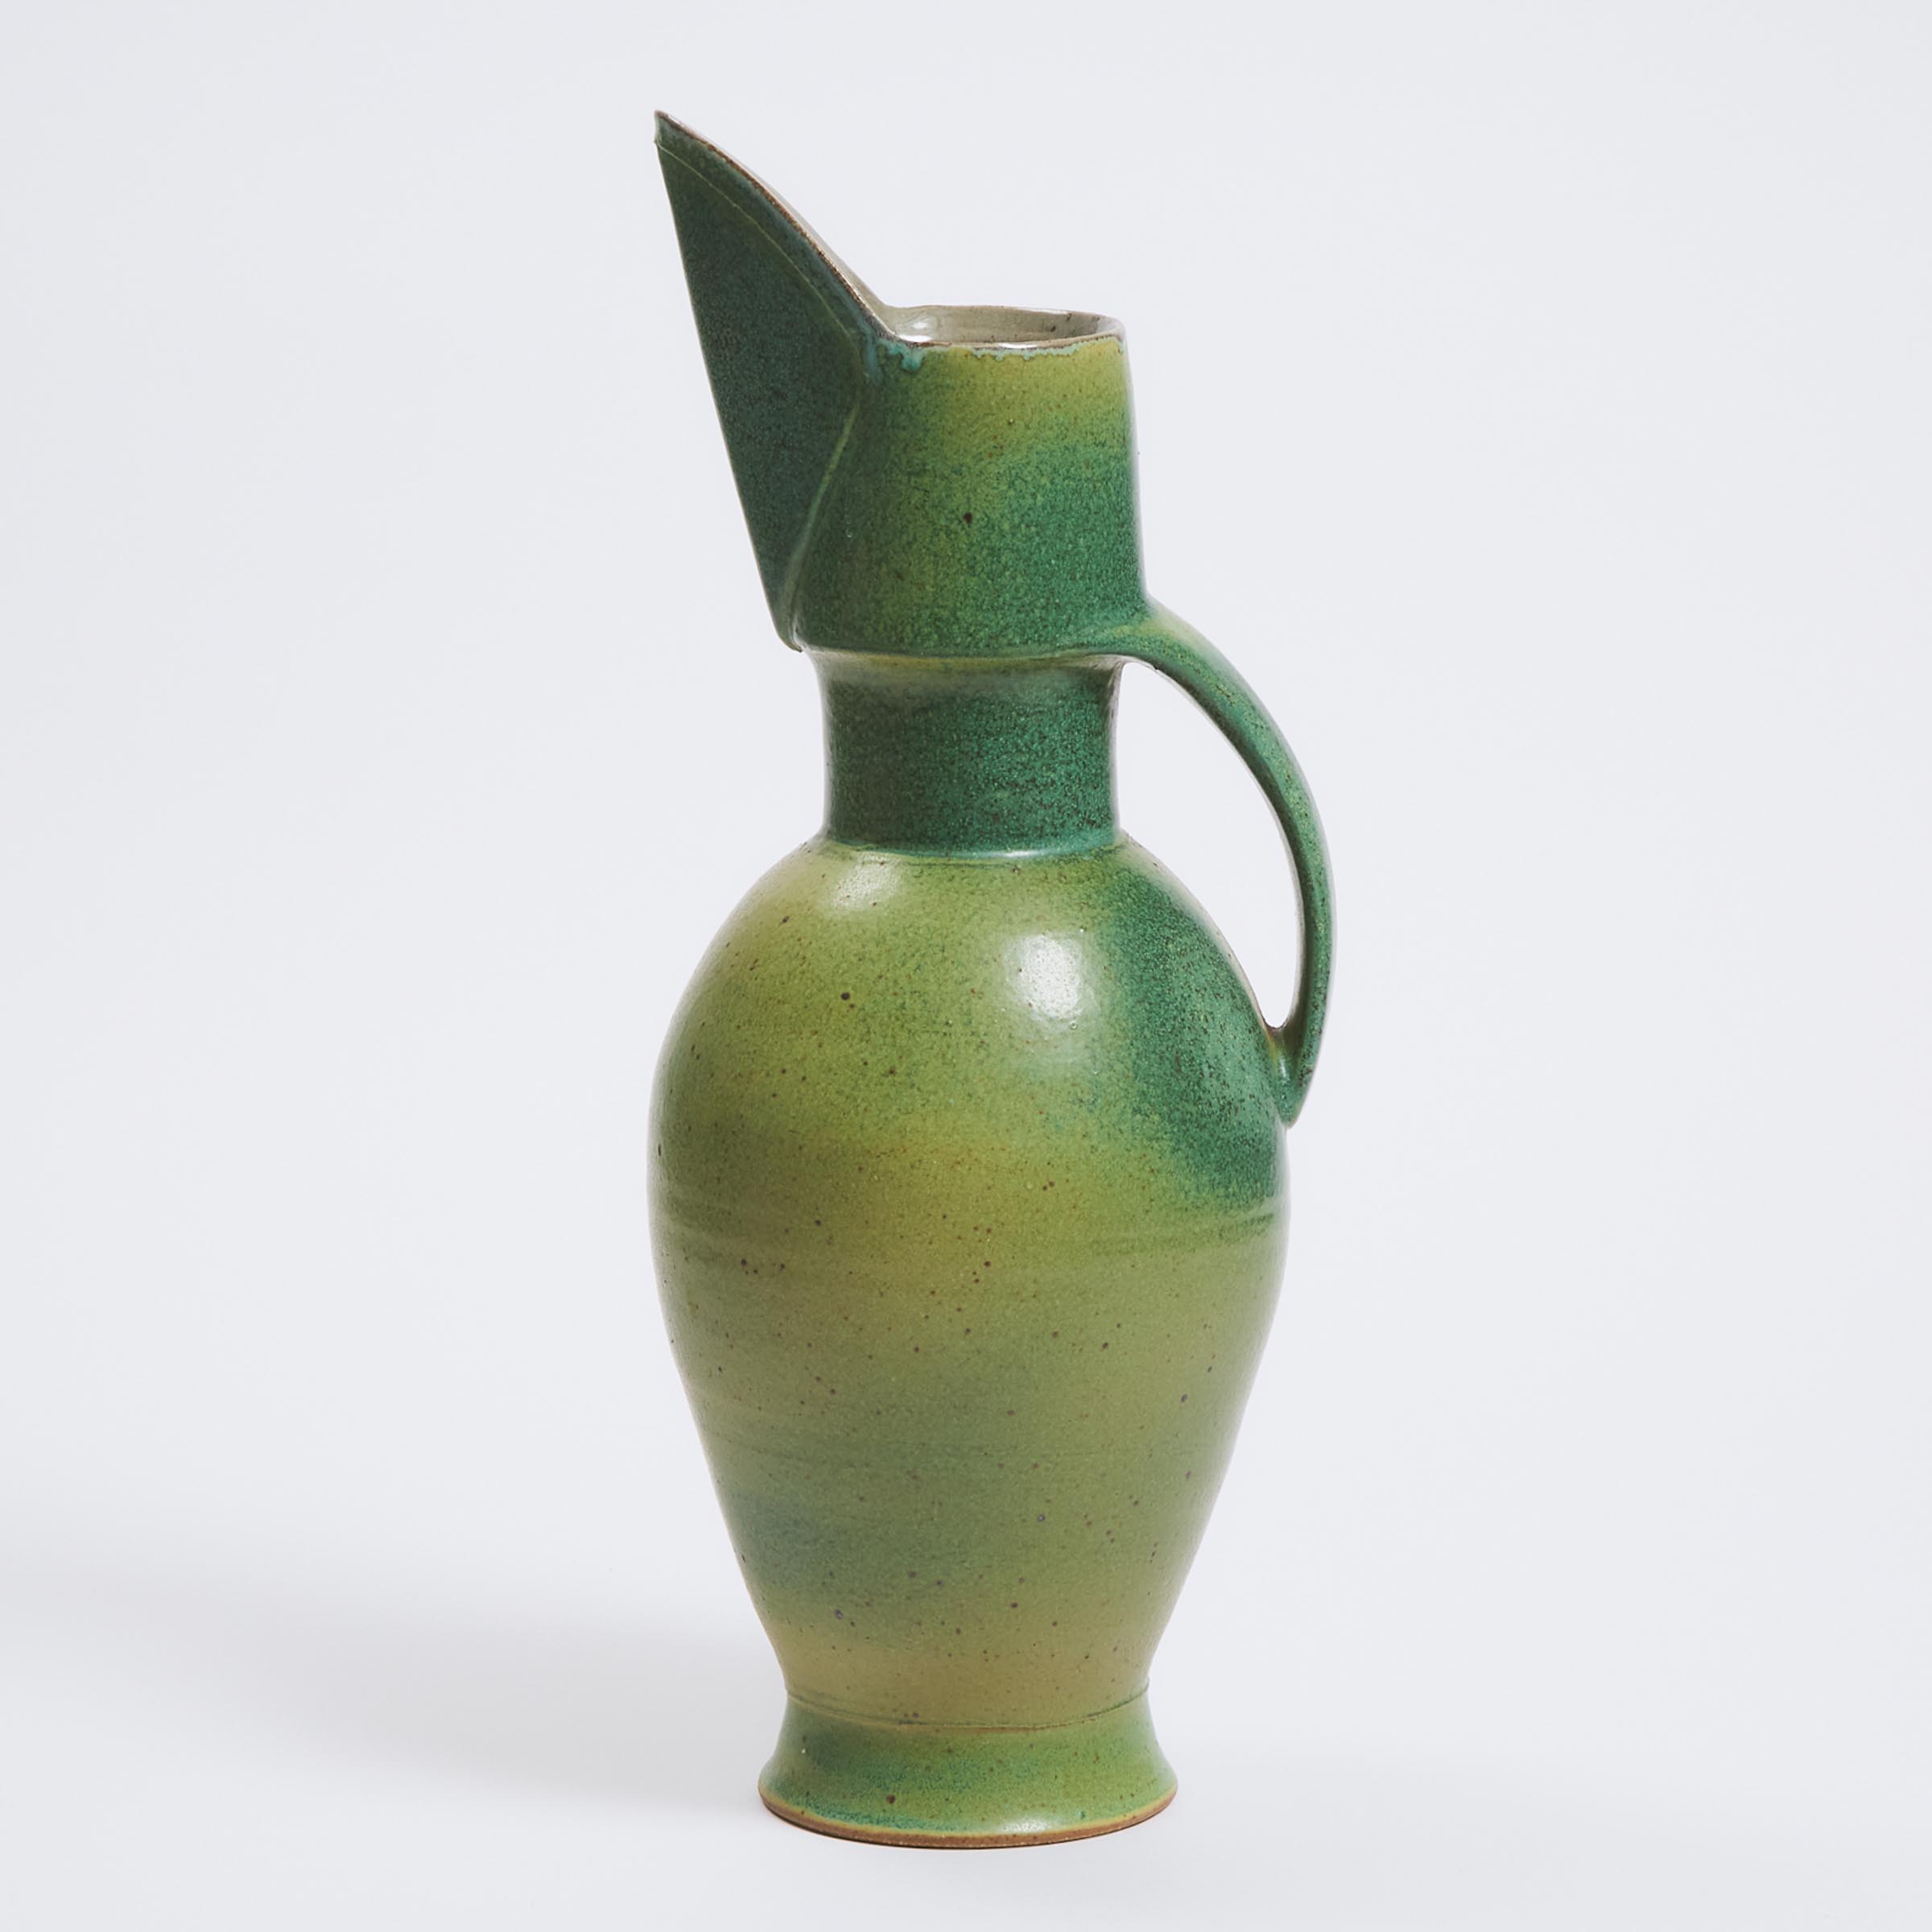 Bruce Cochrane (Canadian, b.1953), Large Green Glazed Stoneware Ewer, early 21st century